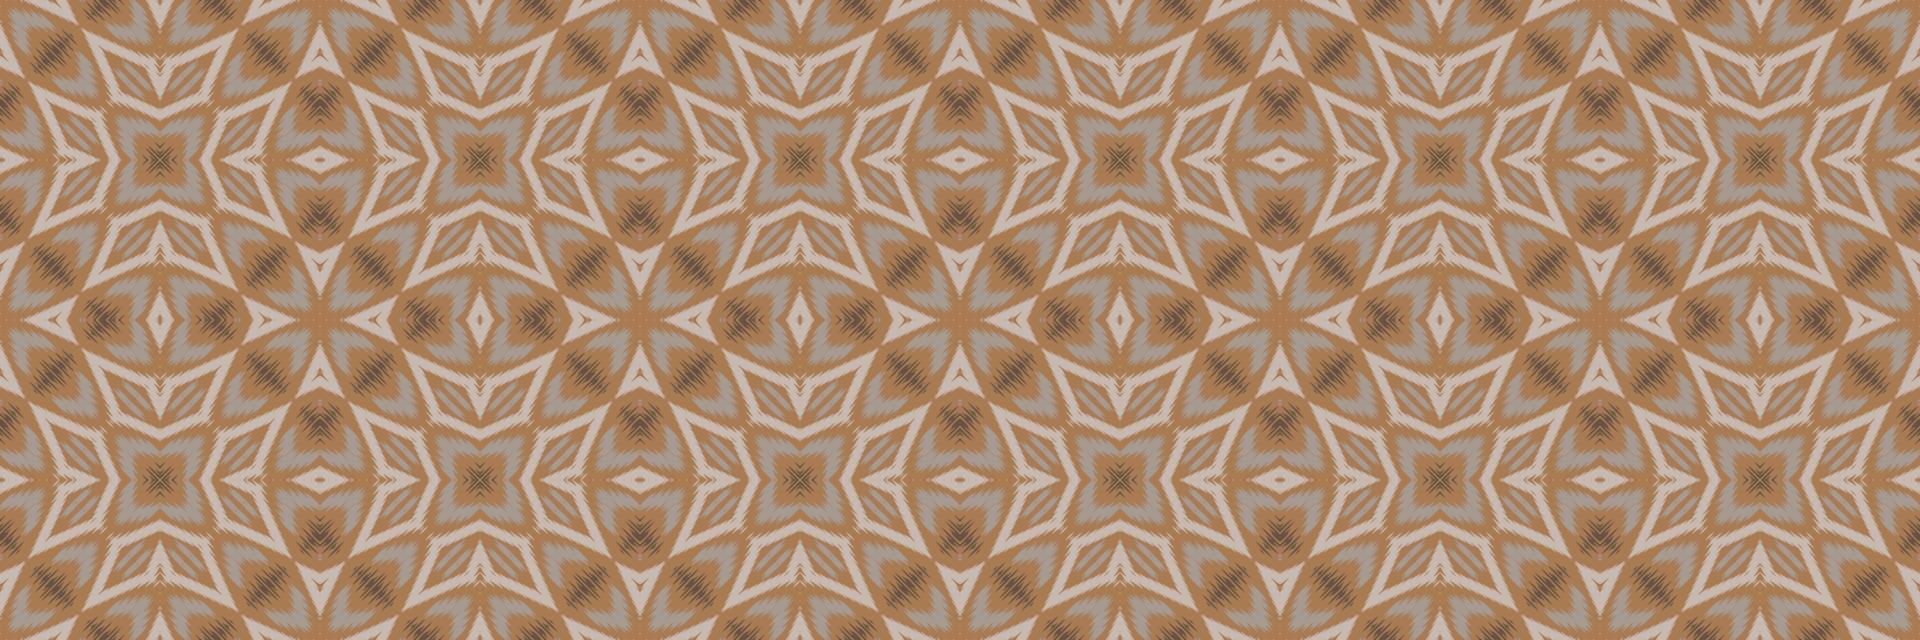 batik têxtil ikkat ou ikat damasco padrão sem costura design de vetor digital para impressão saree kurti borneo tecido borda pincel símbolos amostras elegantes